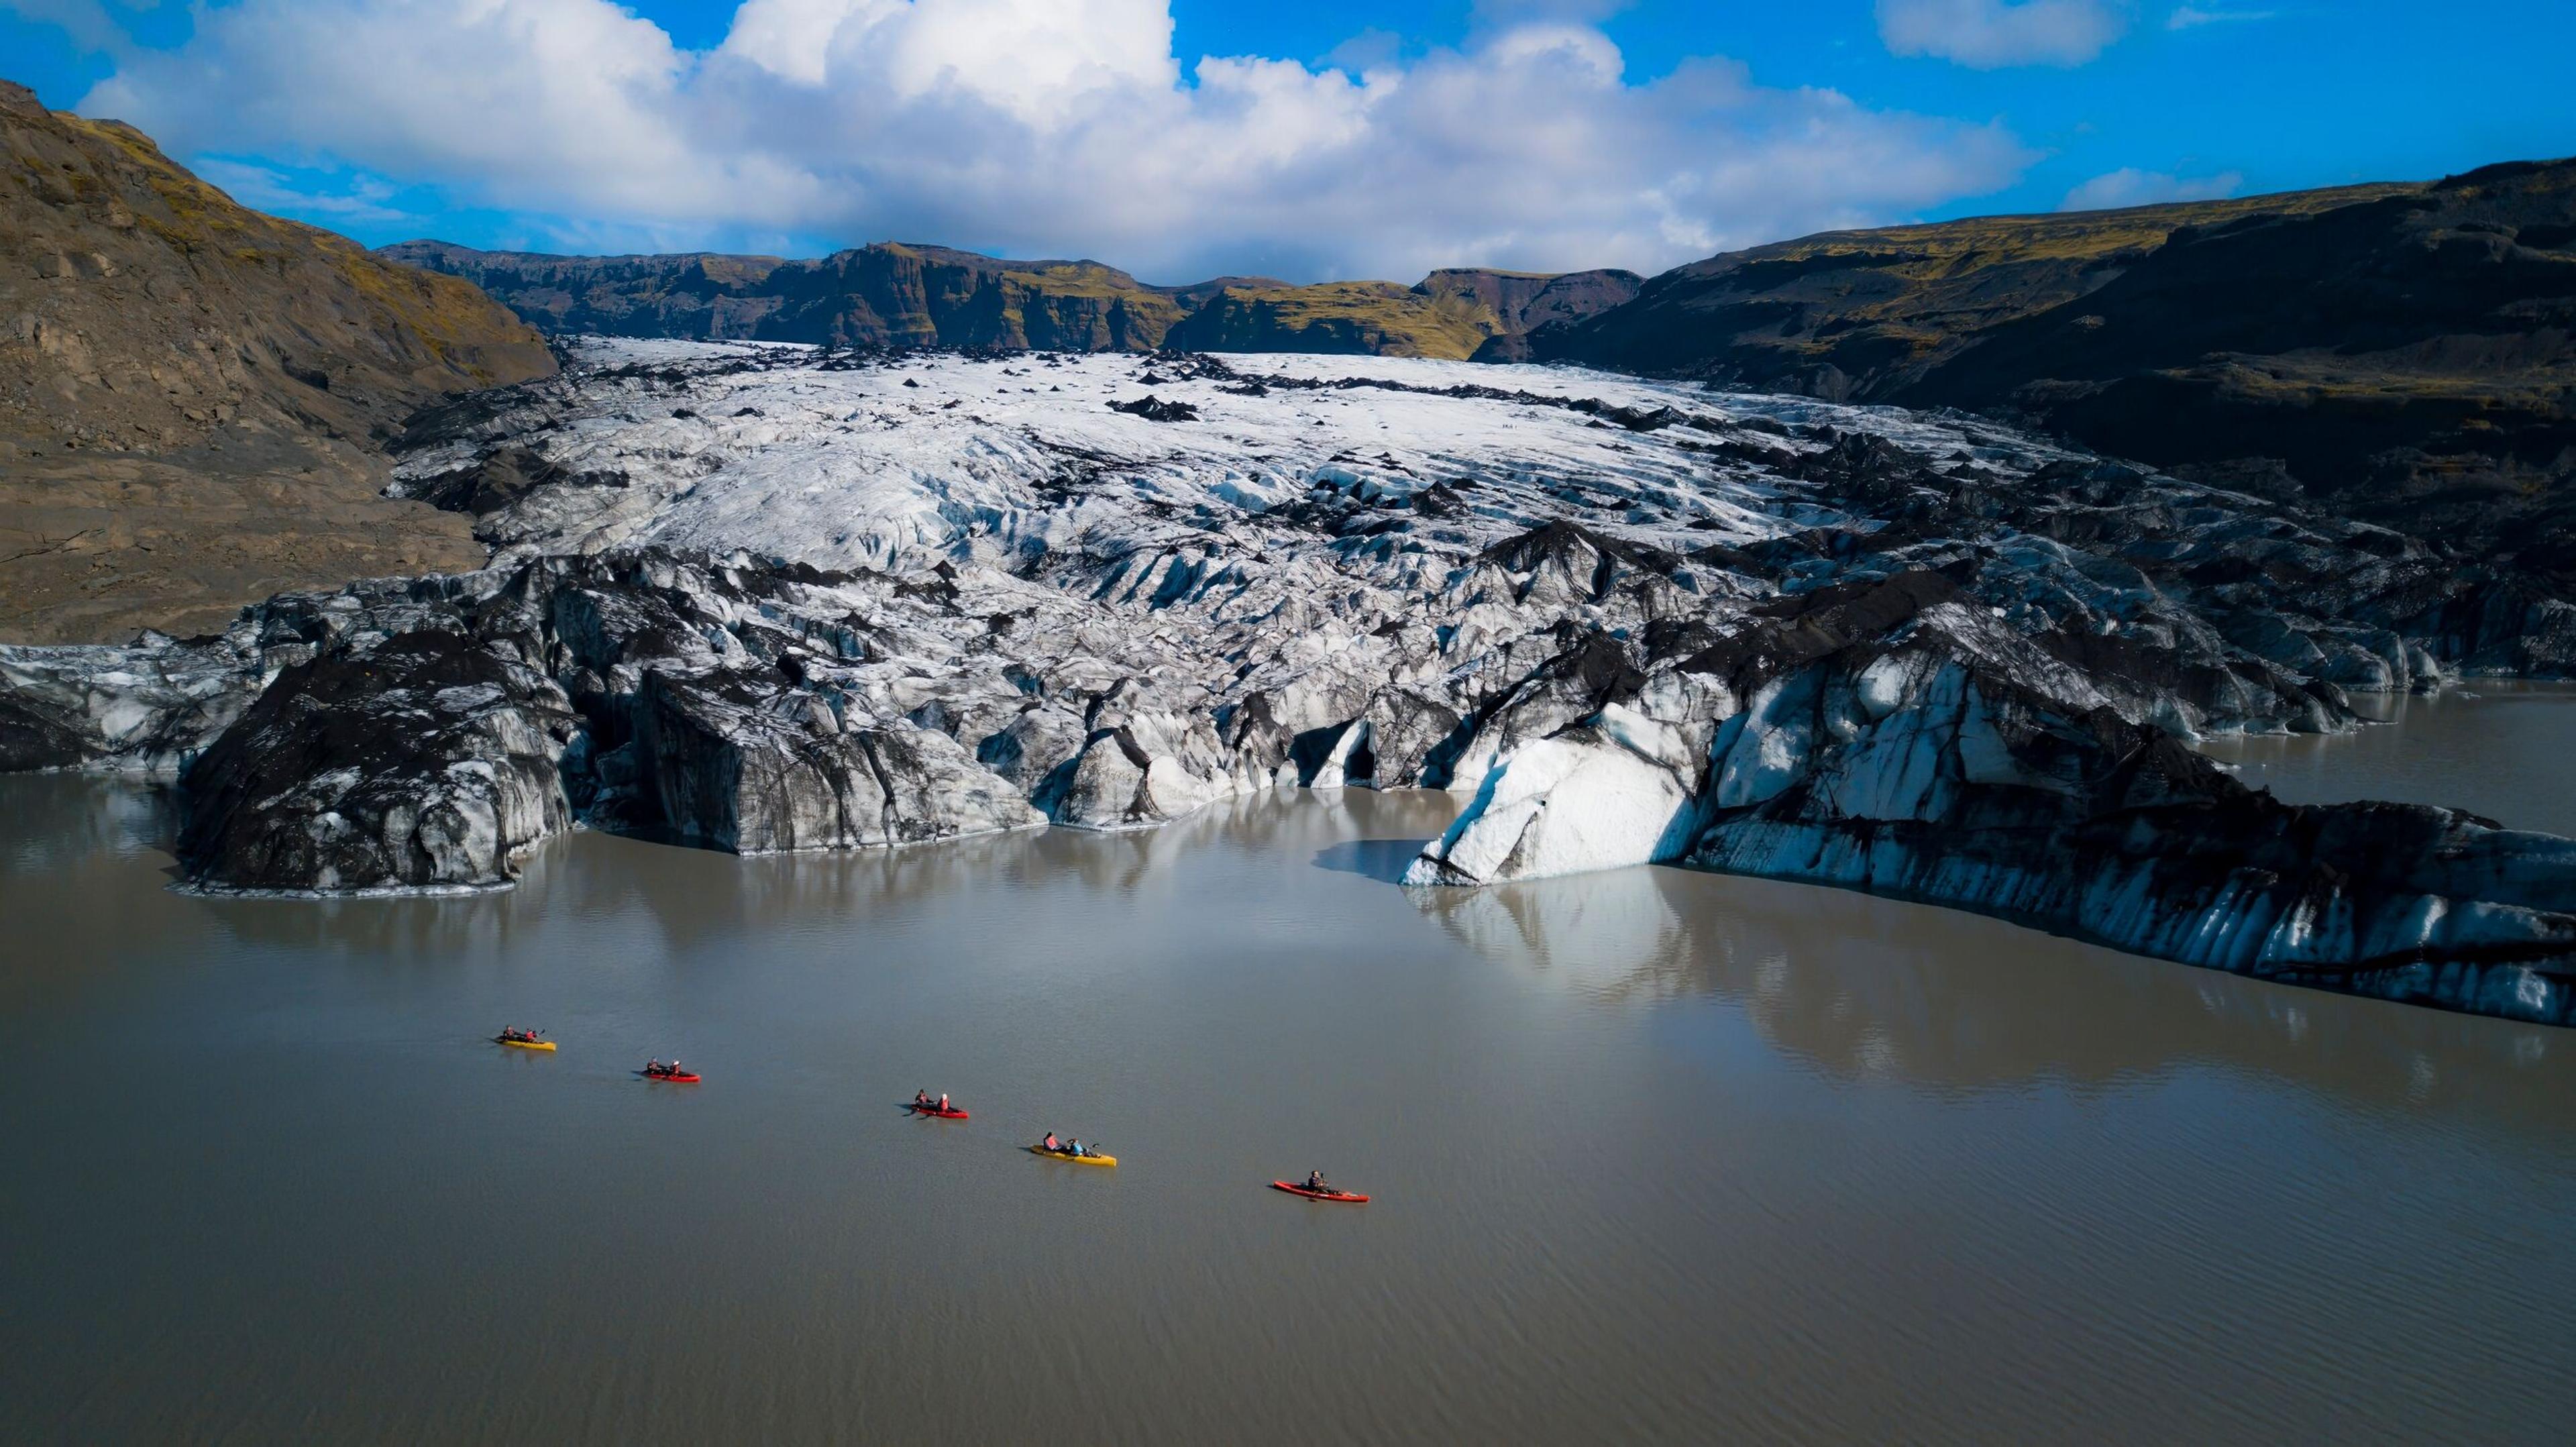 Five kayaks paddling across a serene lagoon, headed toward a breathtaking glacier in a stunning natural landscape